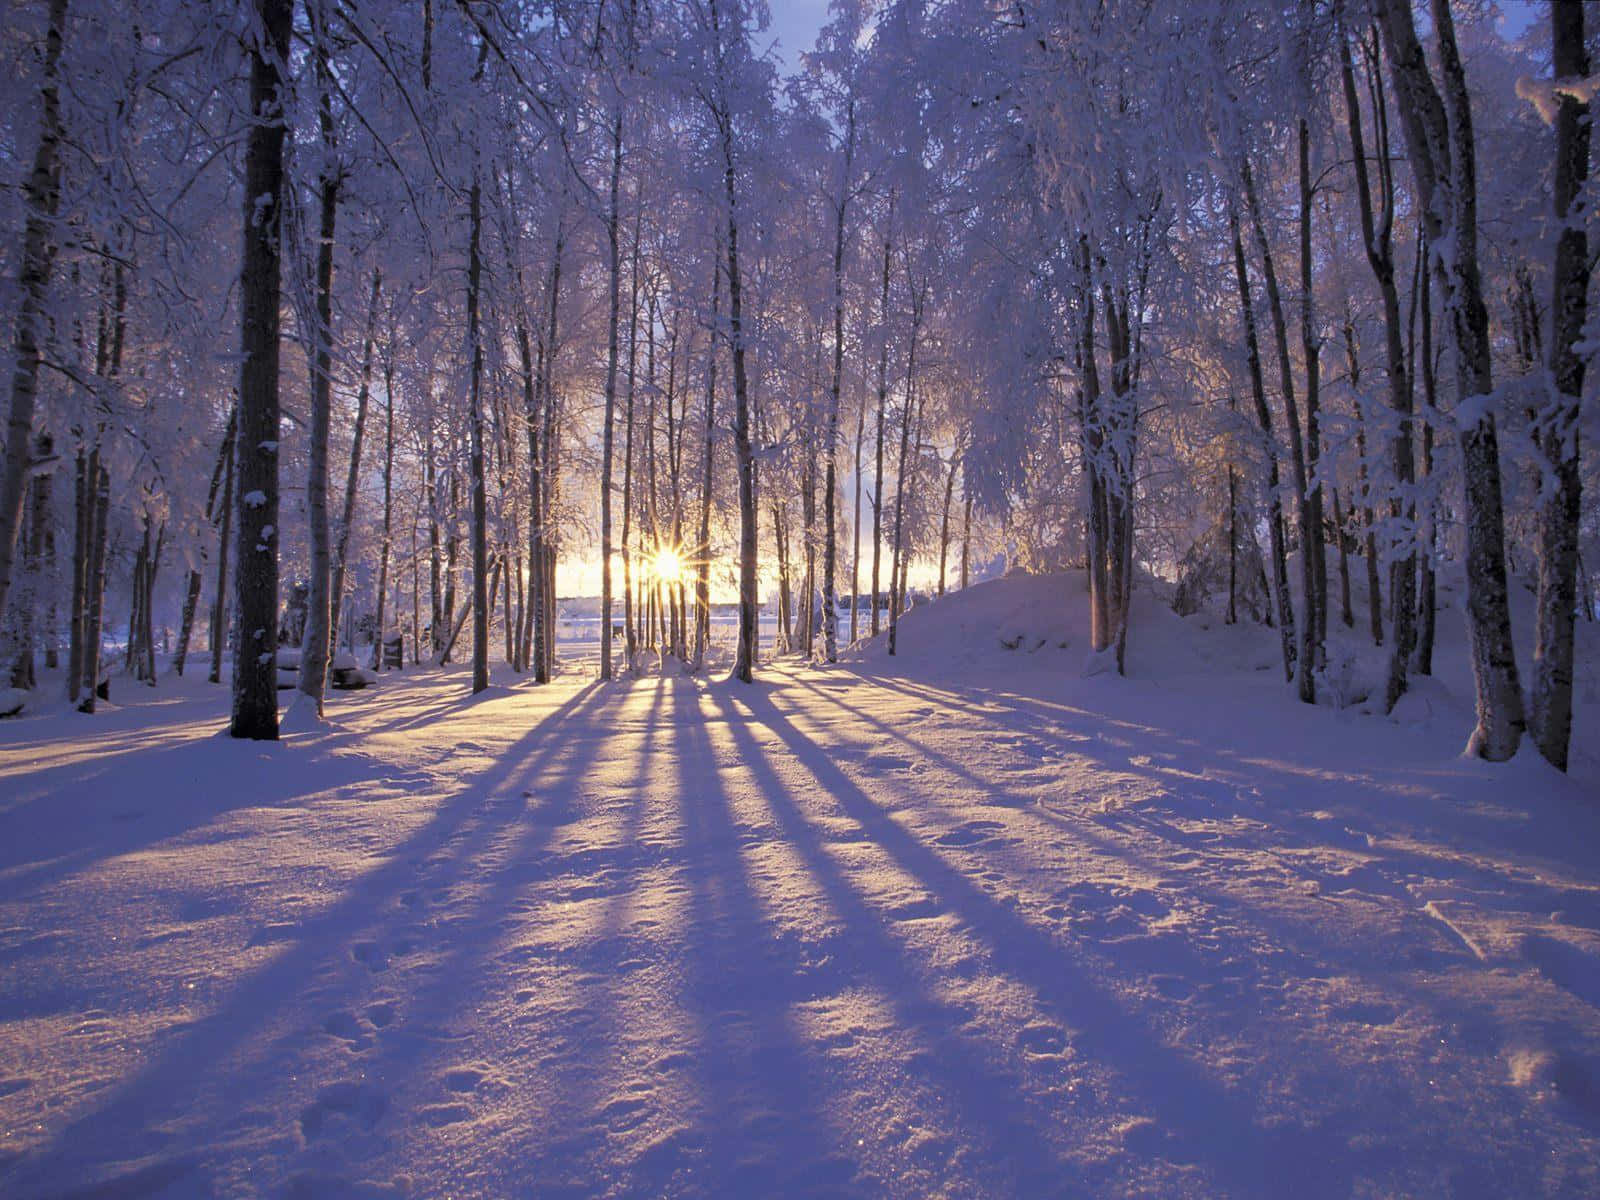 Imagende Un Bosque Invernal